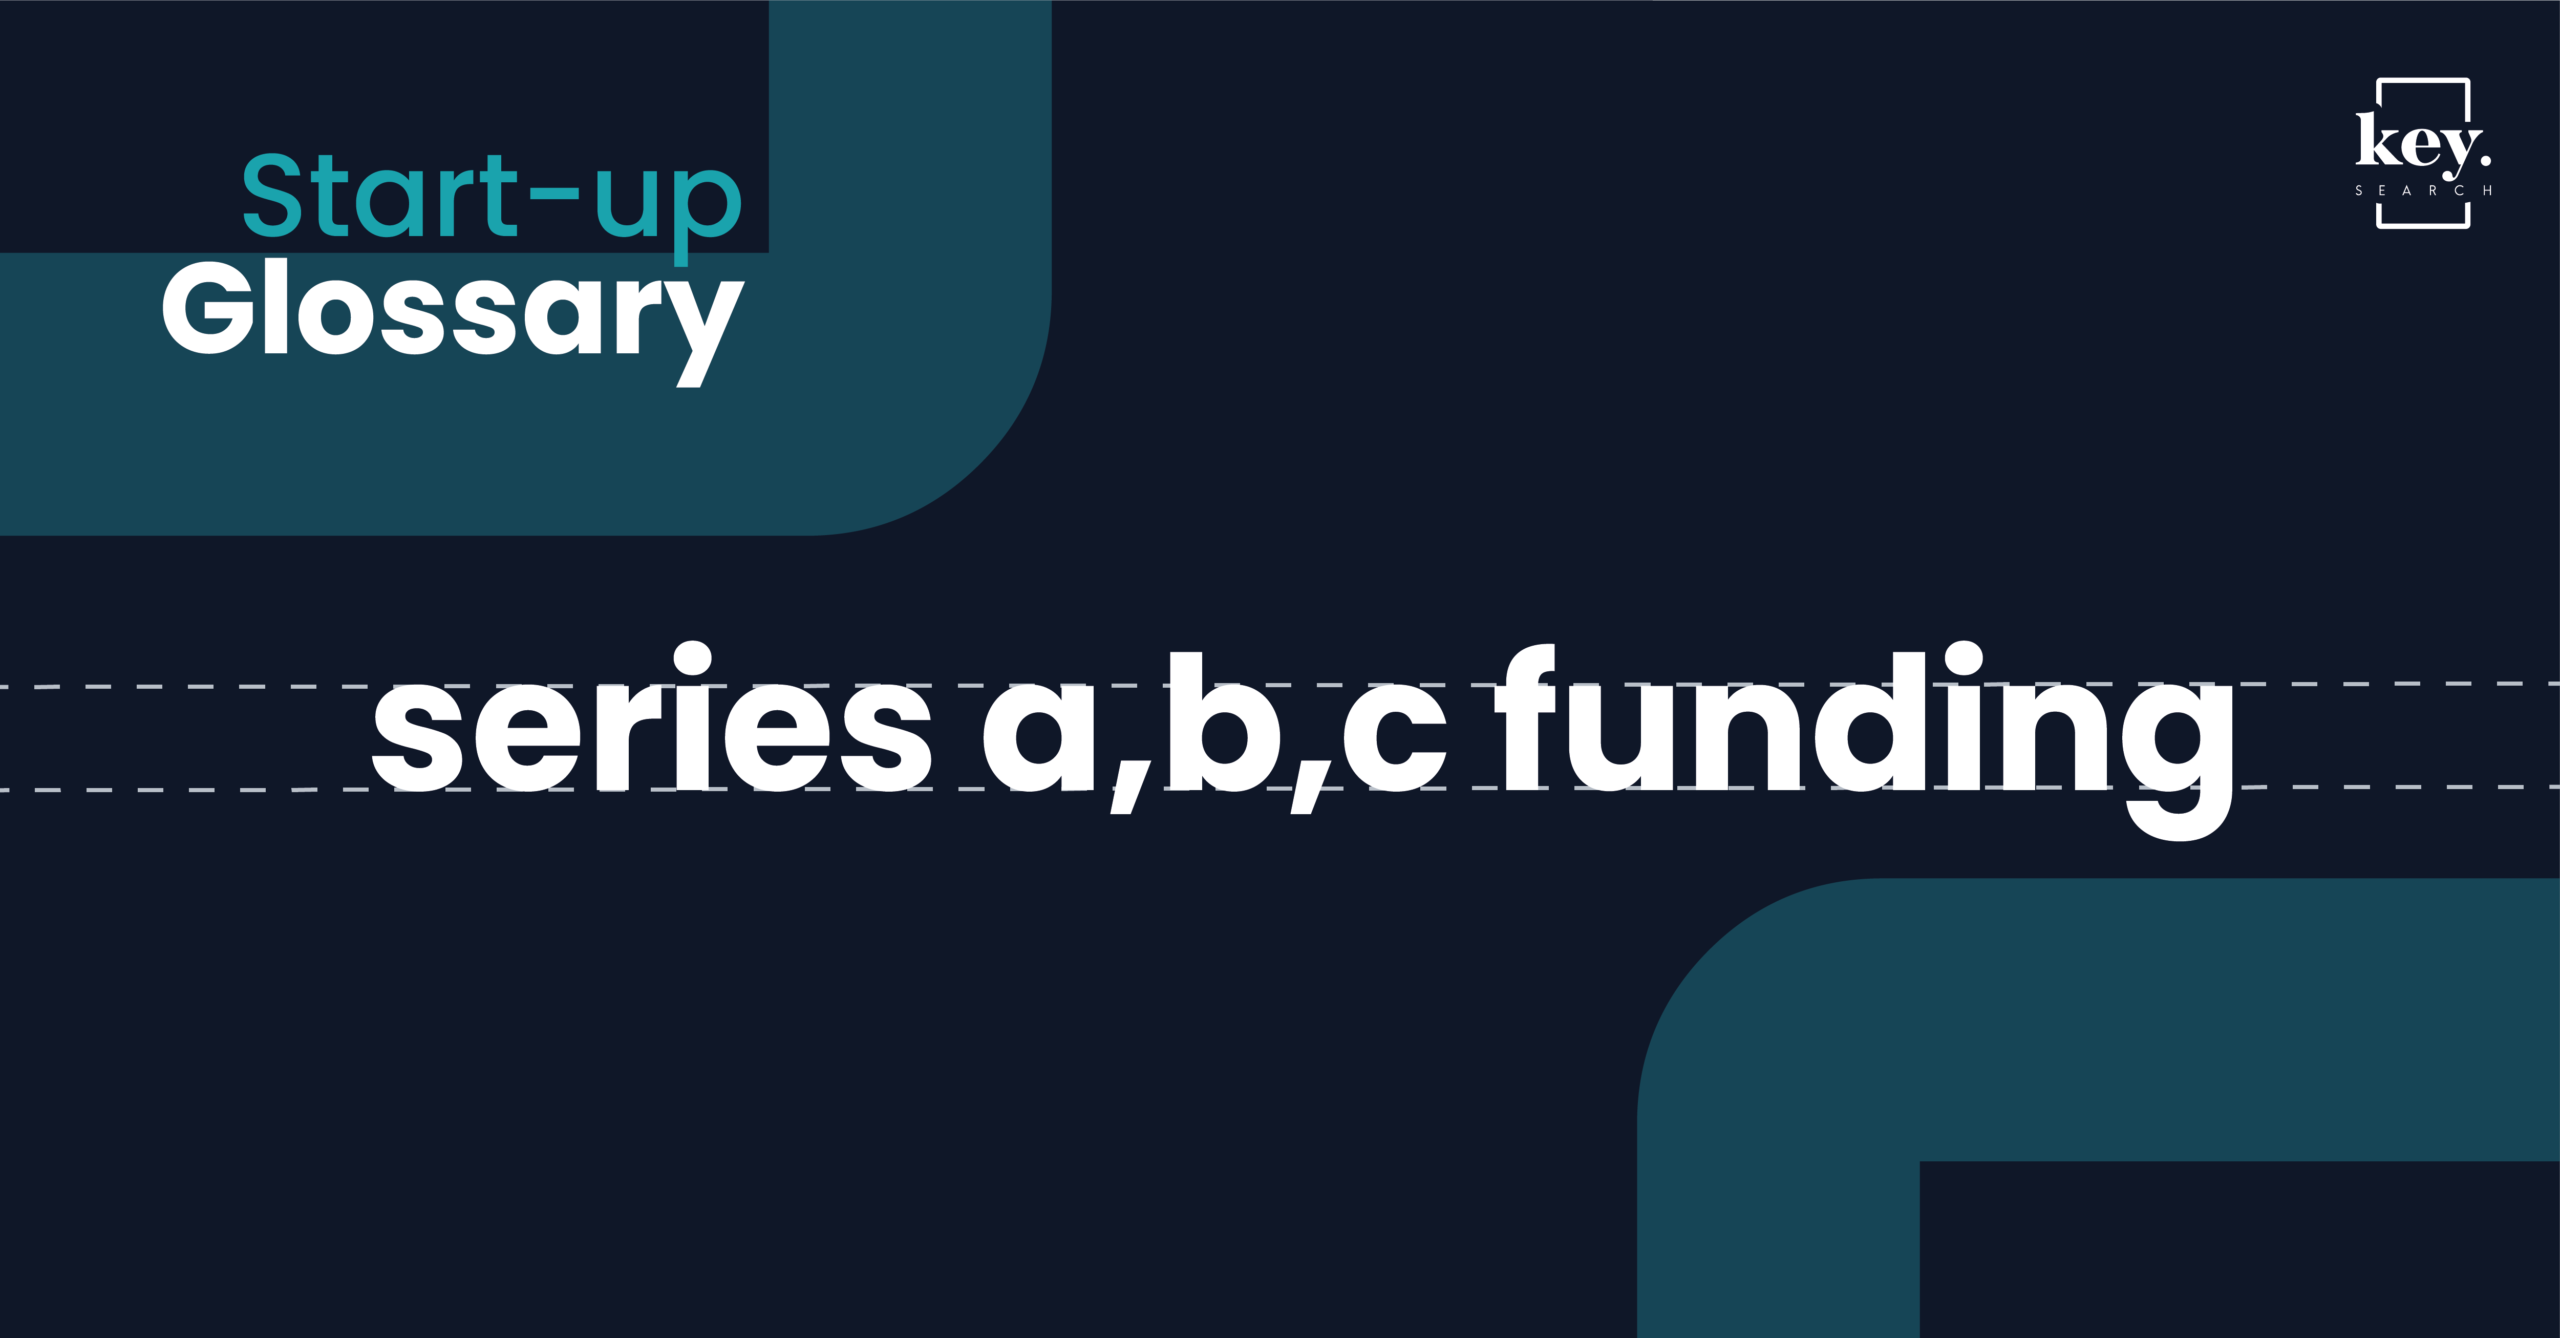 Start-up Glossary_Series A,B,C Funding